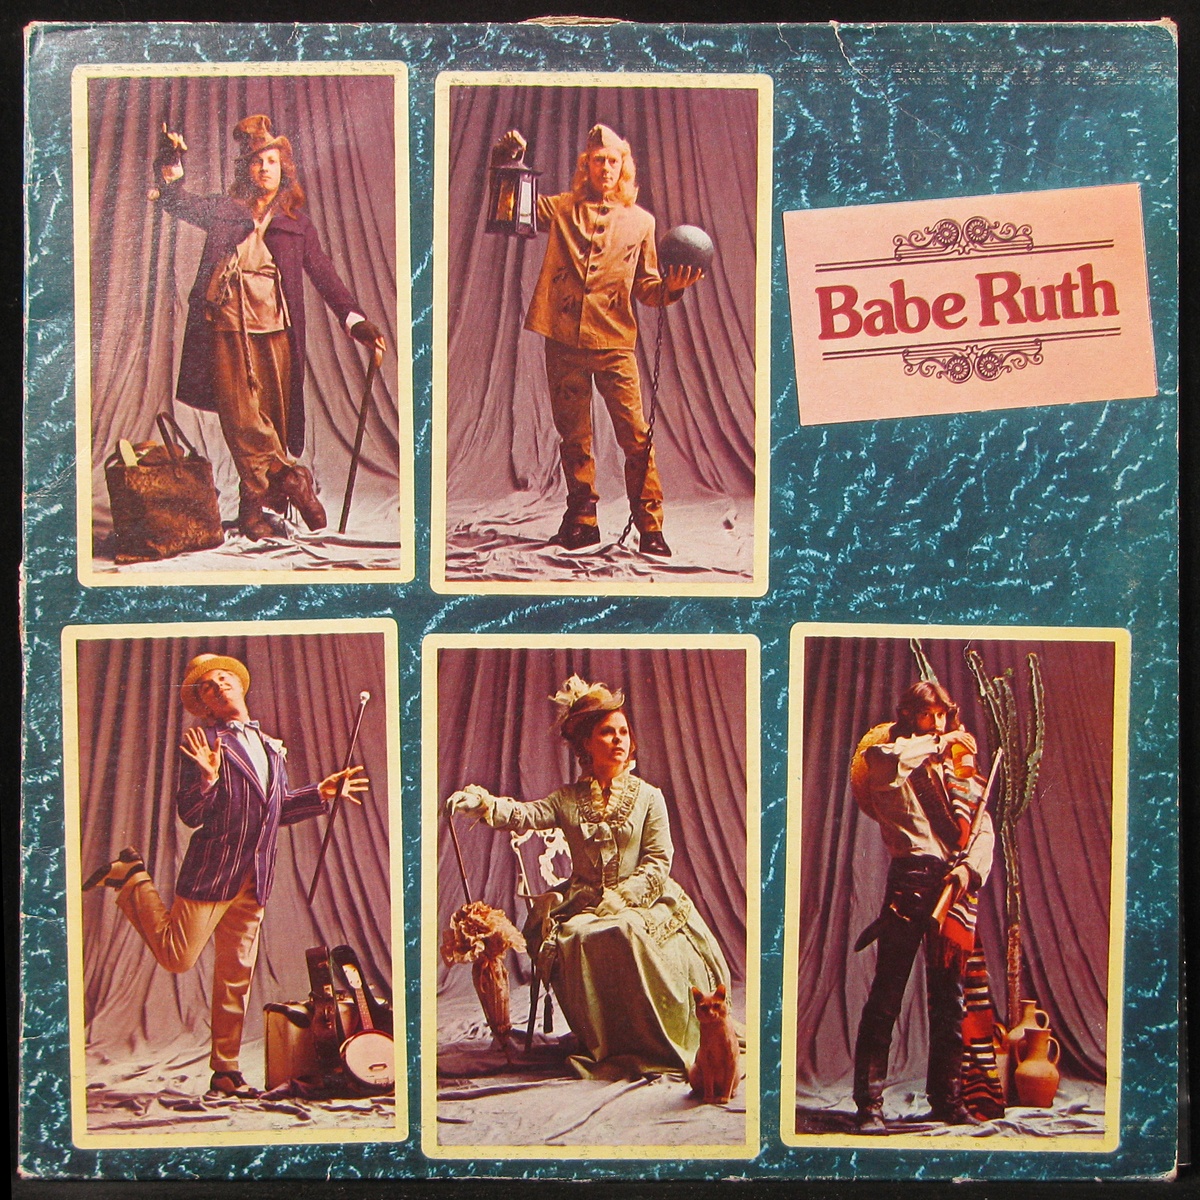 Другие пластинки Babe Ruth.